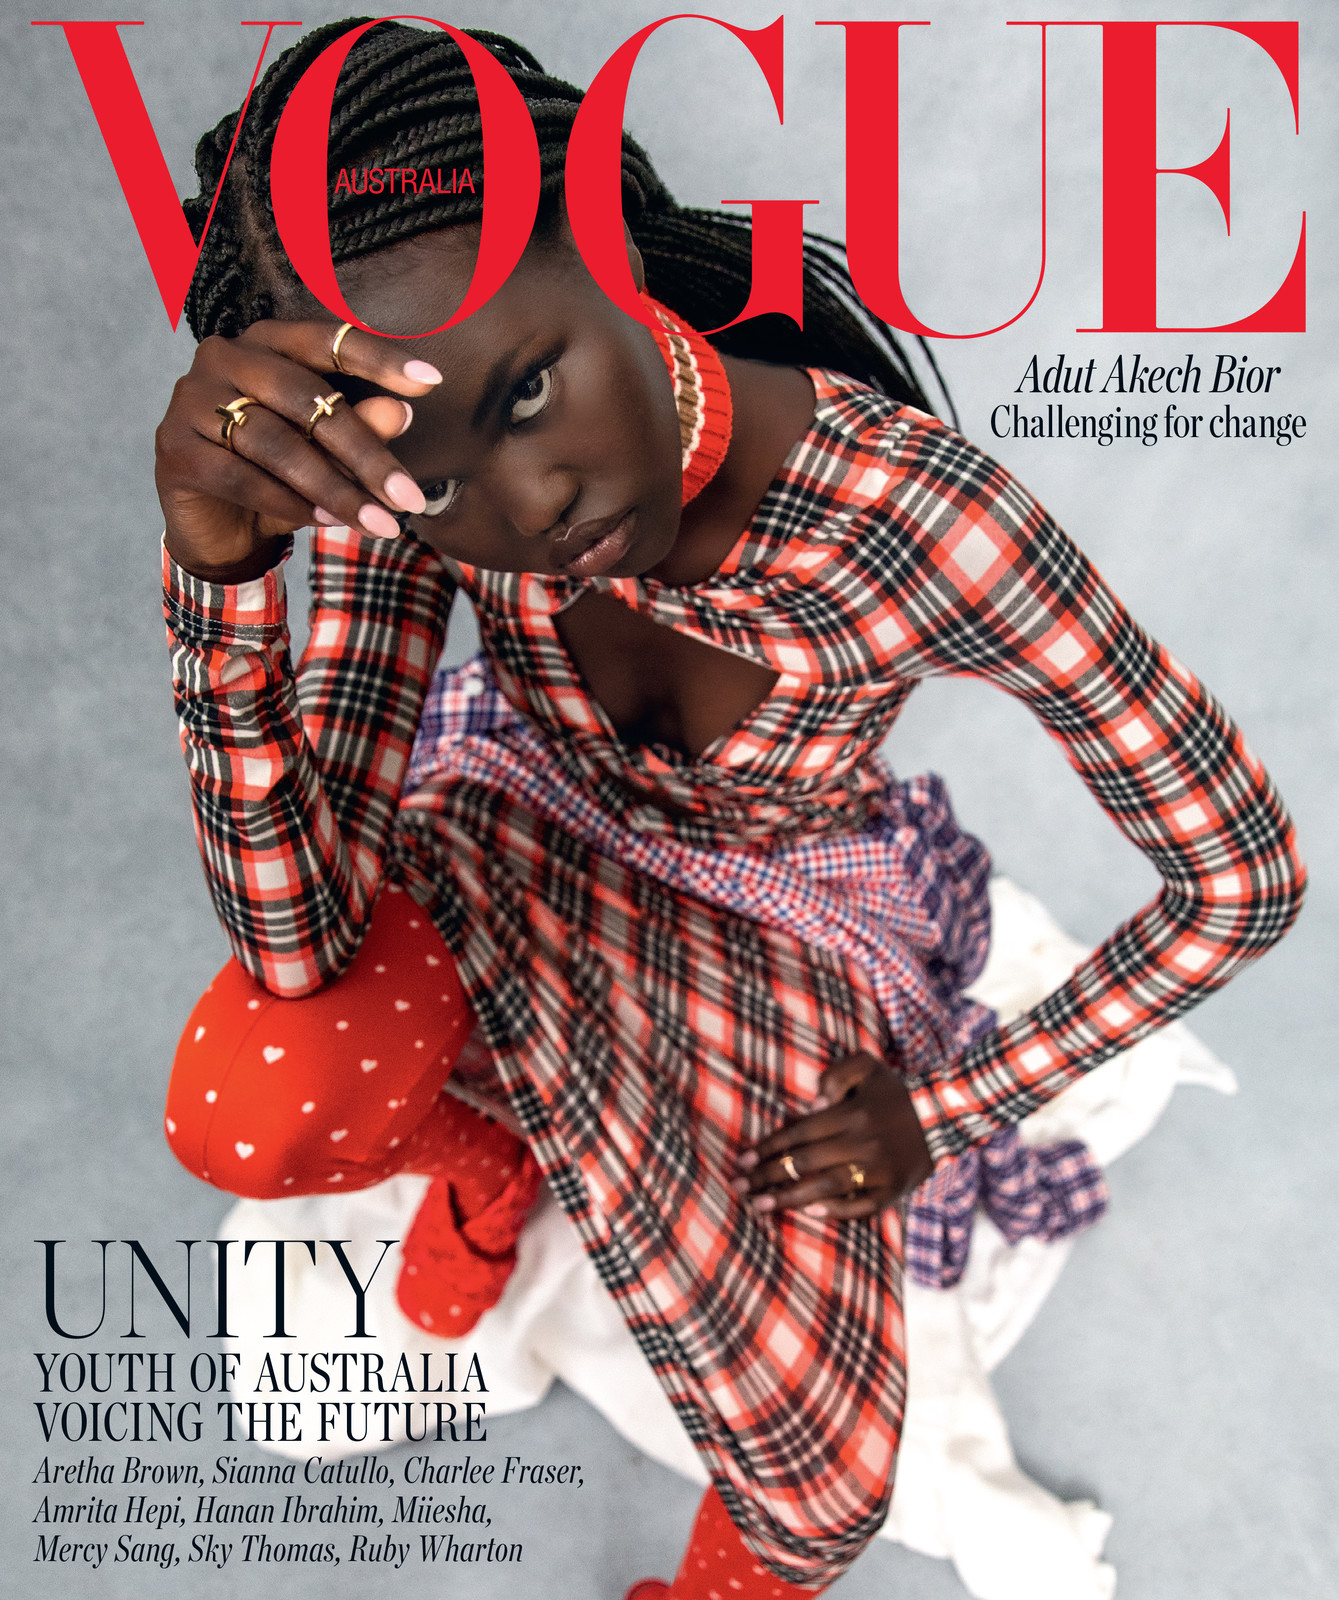 August 20 - Vogue Australia